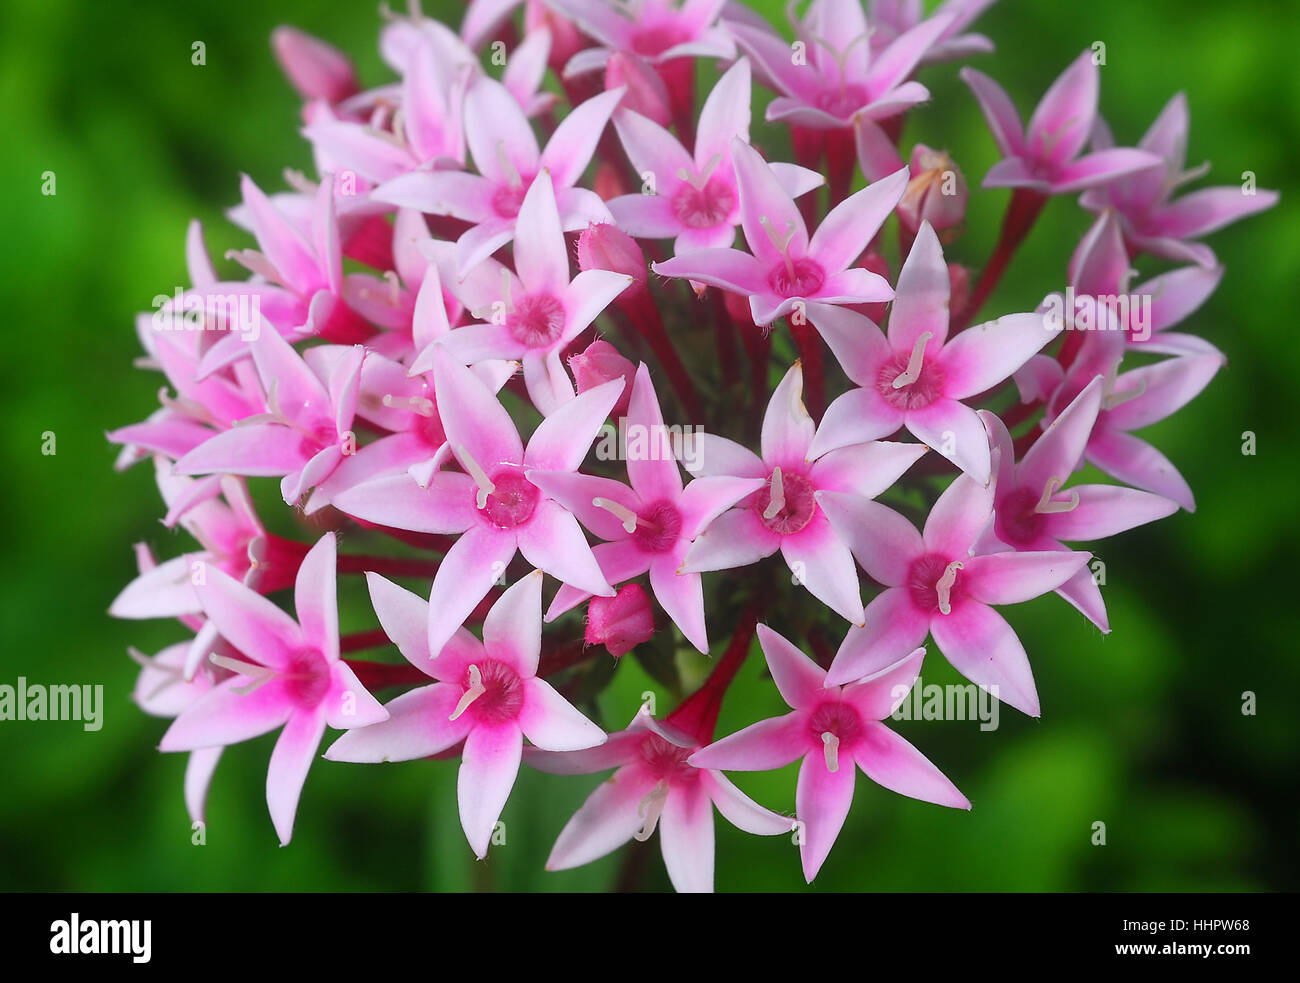 flower, plant, bloom, blossom, flourish, flourishing, nature, colour, garden, Stock Photo